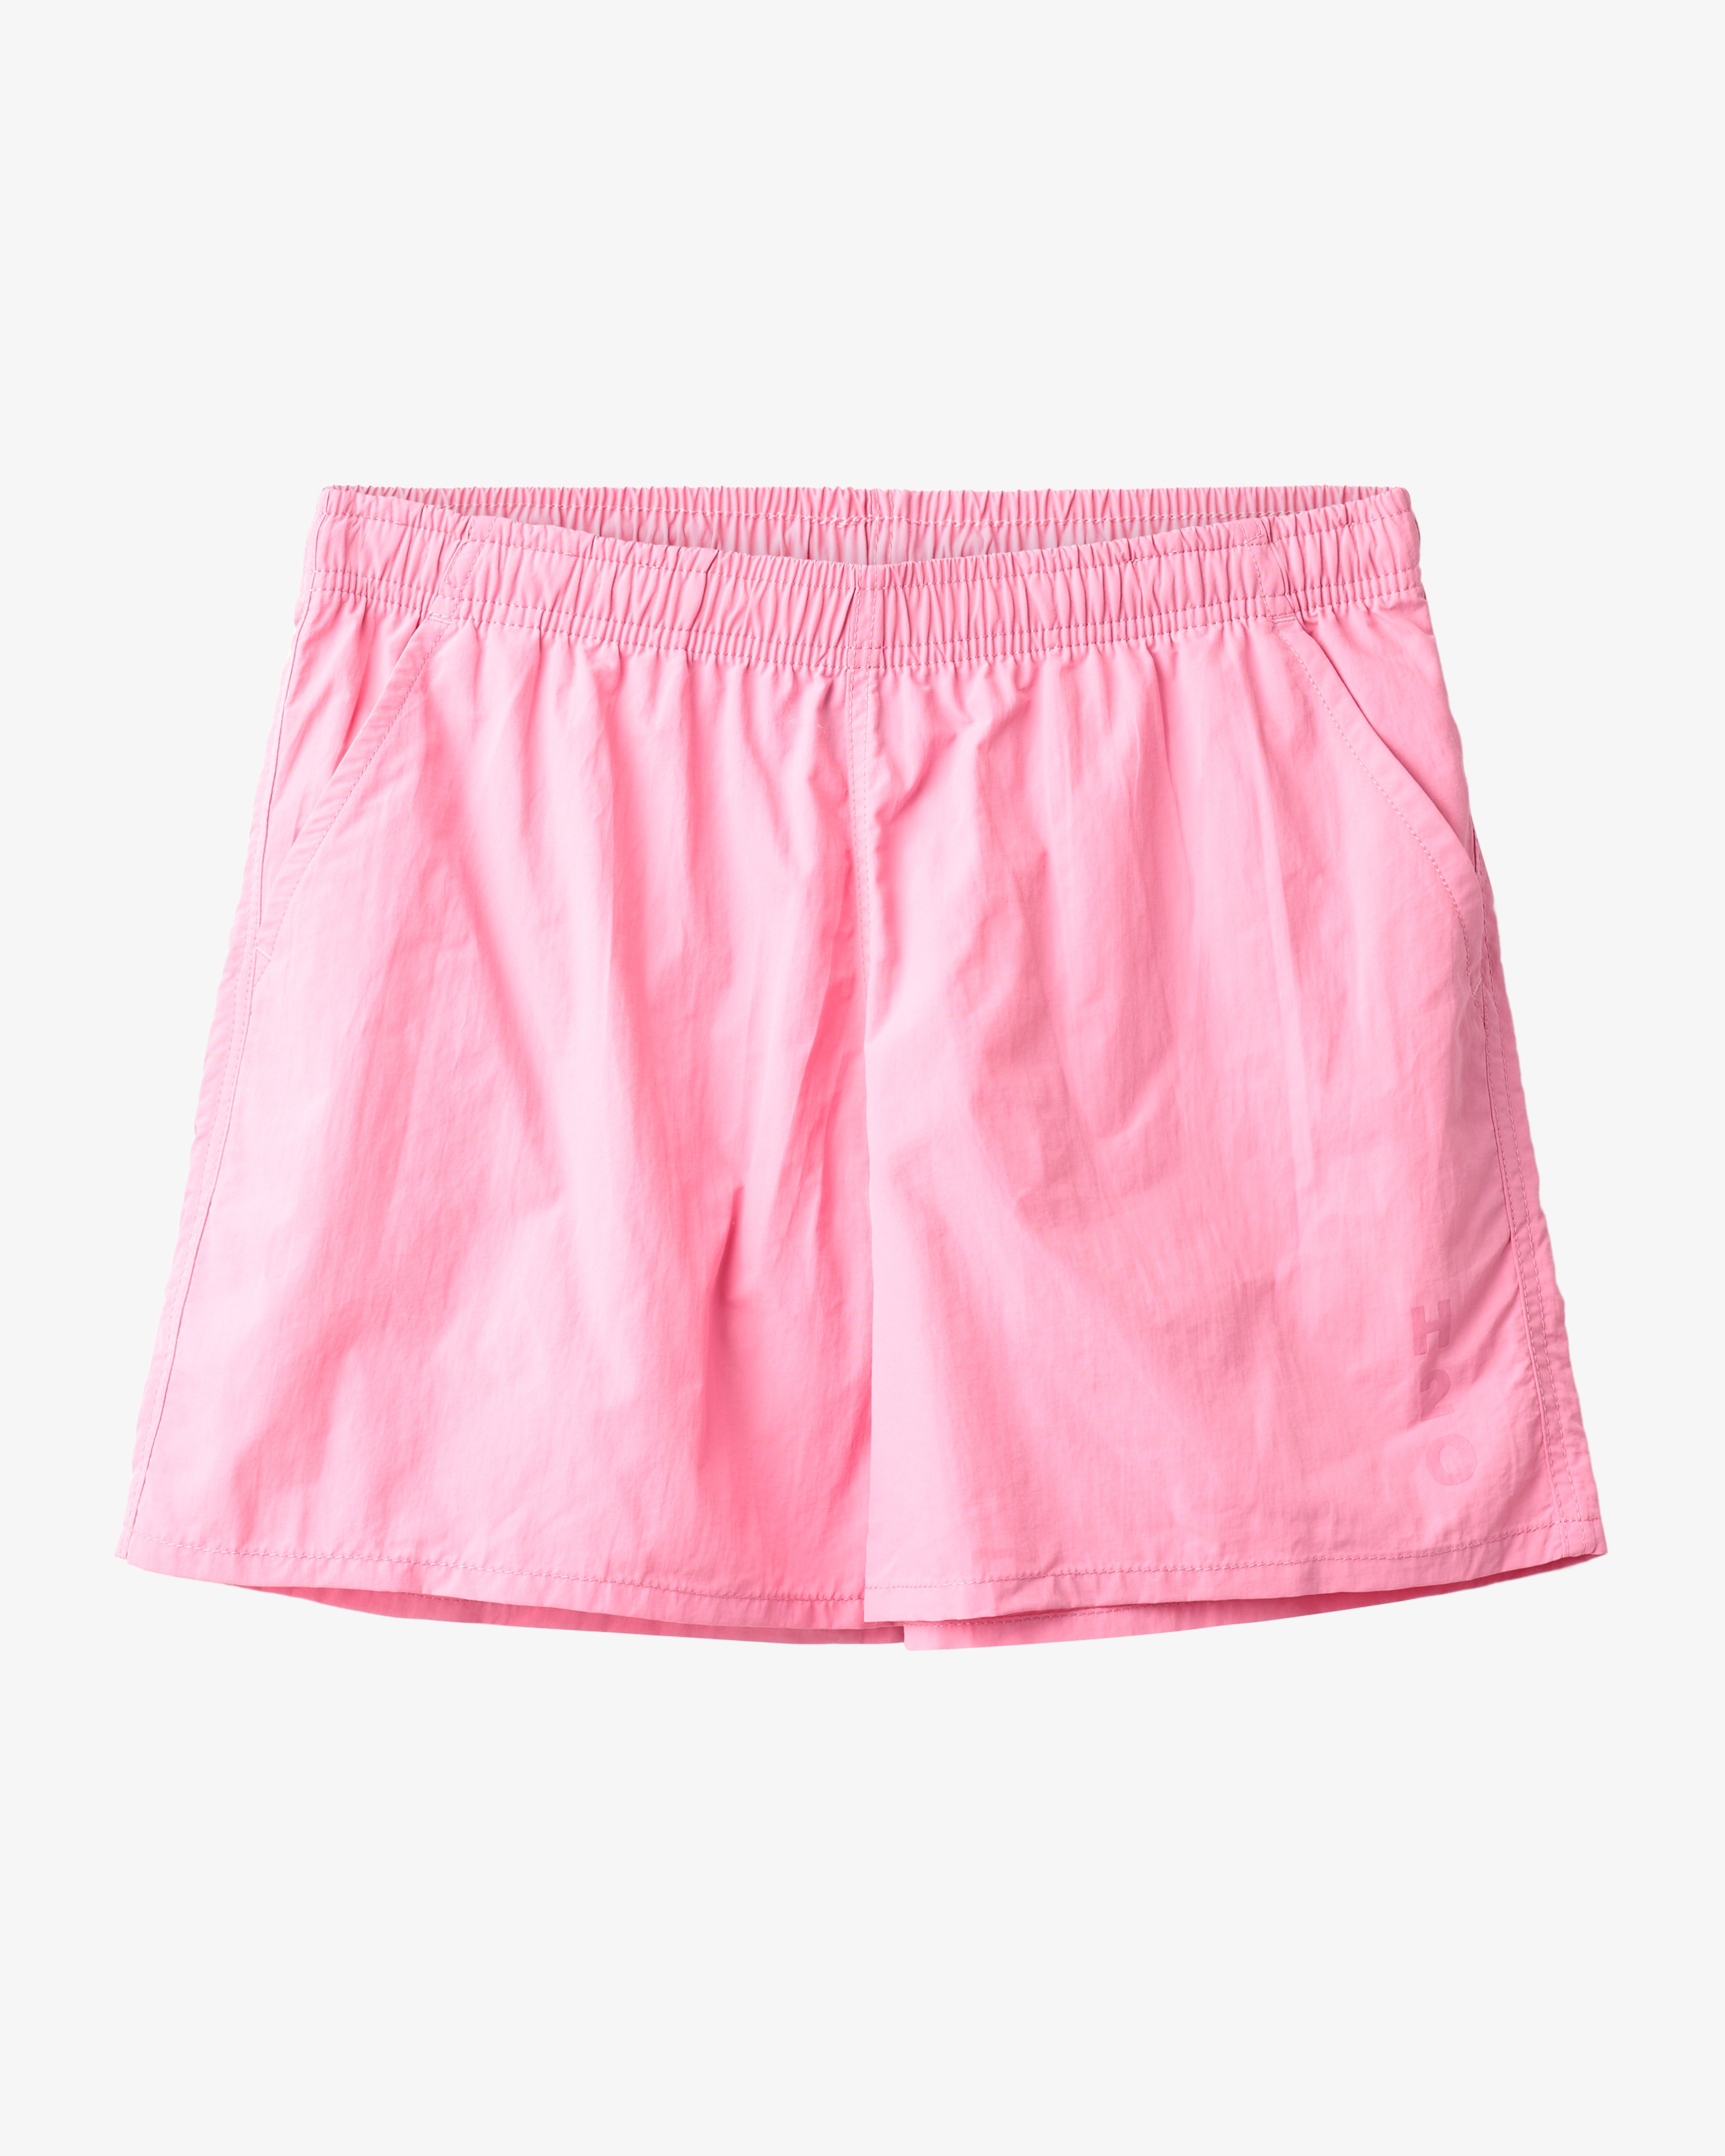 Leisure Woman Swim Shorts - Sachet Pink